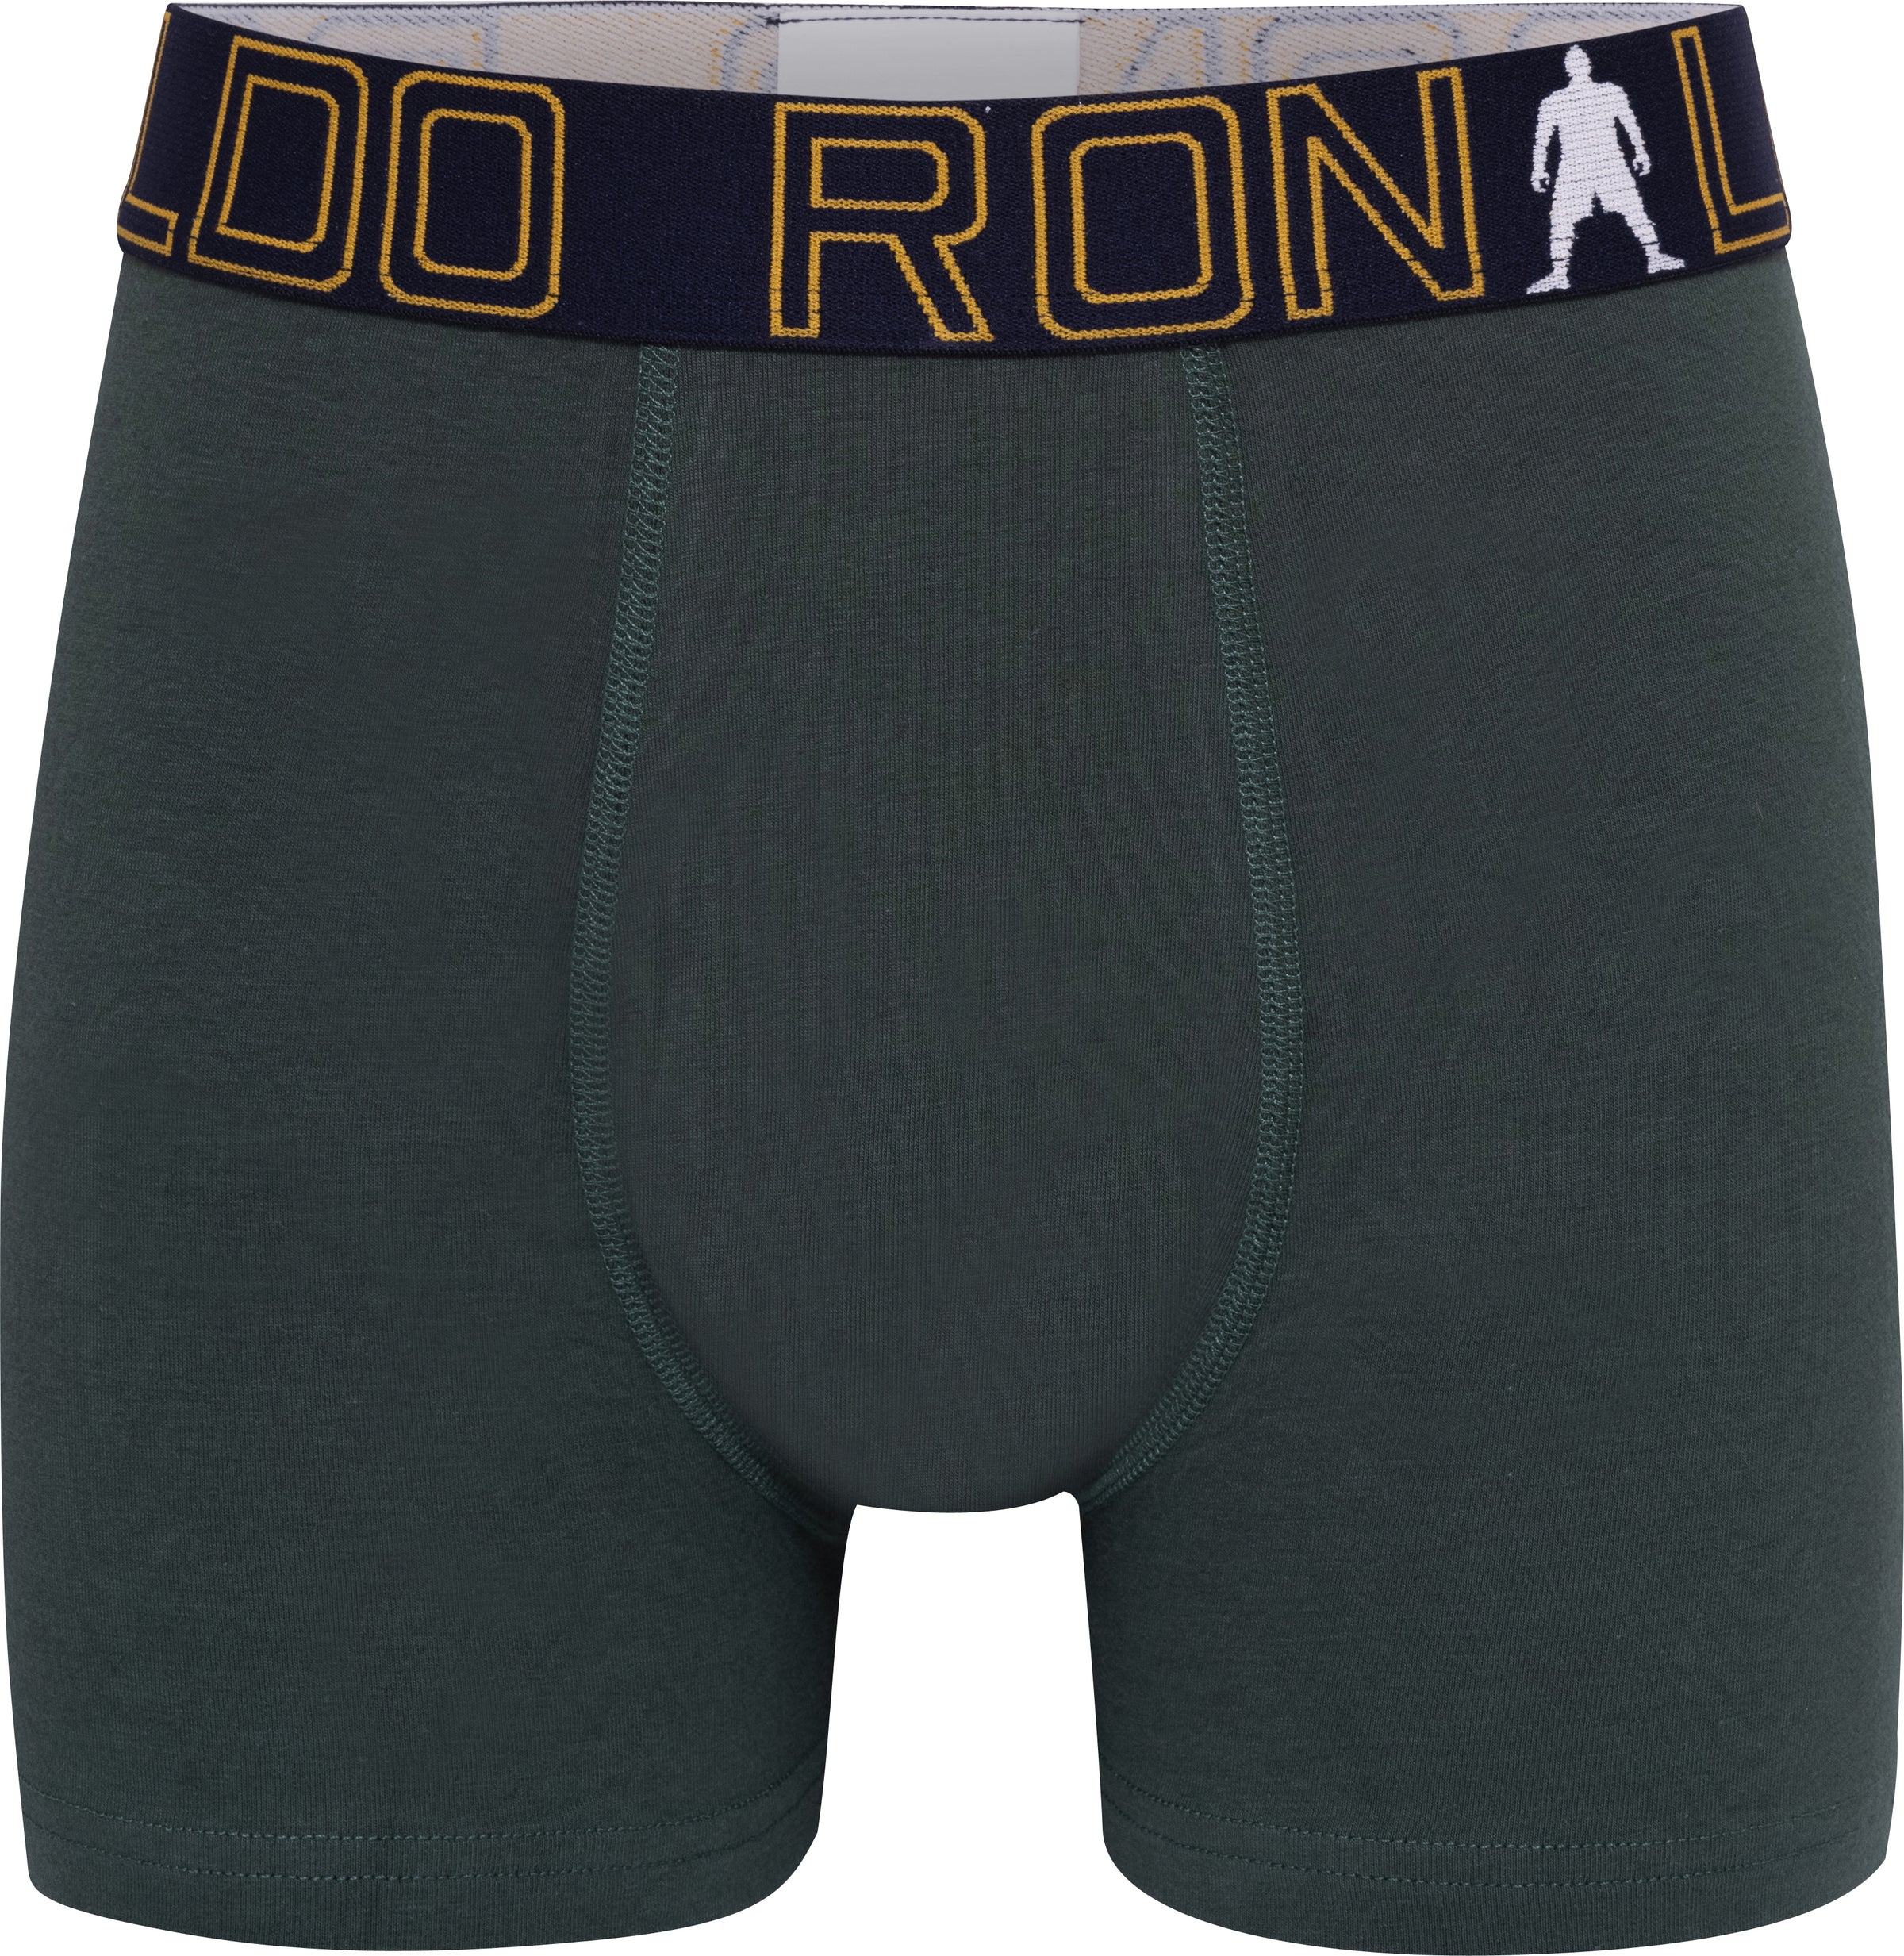 SURSTOCKAGE 50% OFF CR7 Hommes 1 Pack Fashion Navy Micro Mesh Trunks - – CR7  Underwear